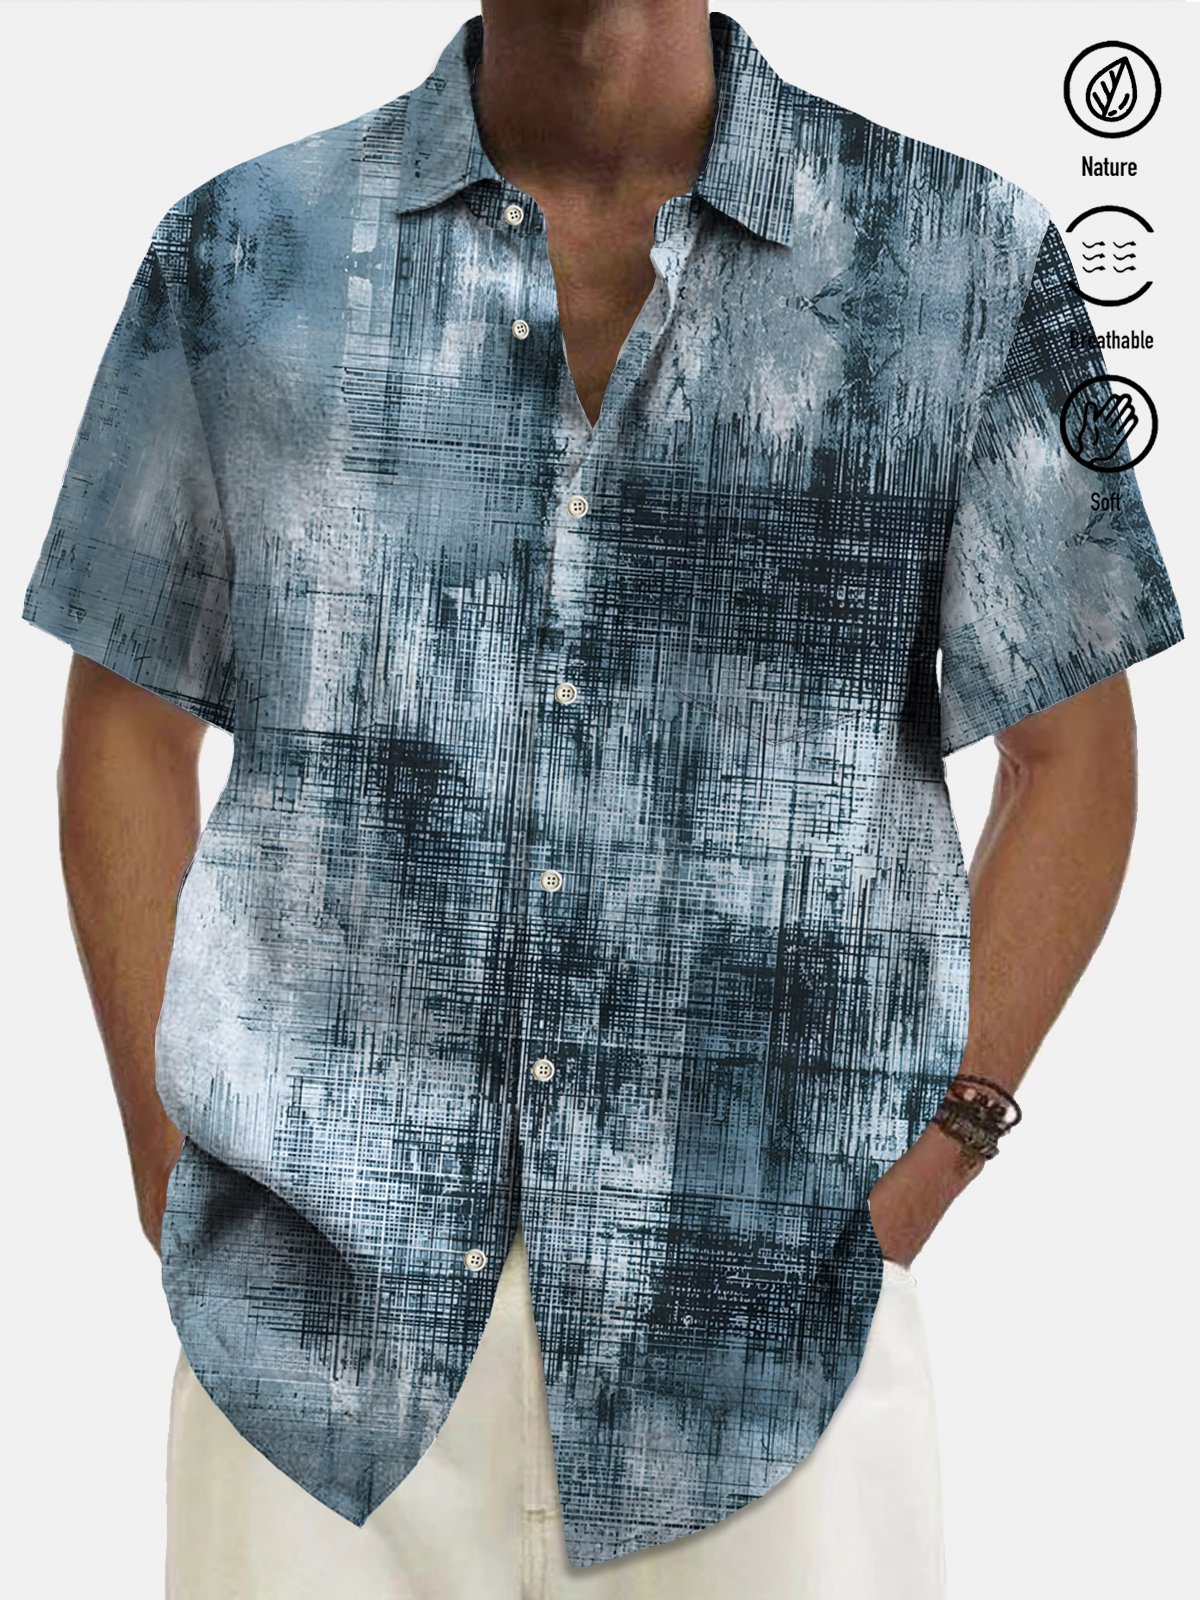 Royaura Beach Vacation Light Blue Men's Hawaiian Shirts Vintage Textured Stretch Easy Care Pocket Camp Shirts Big Tall